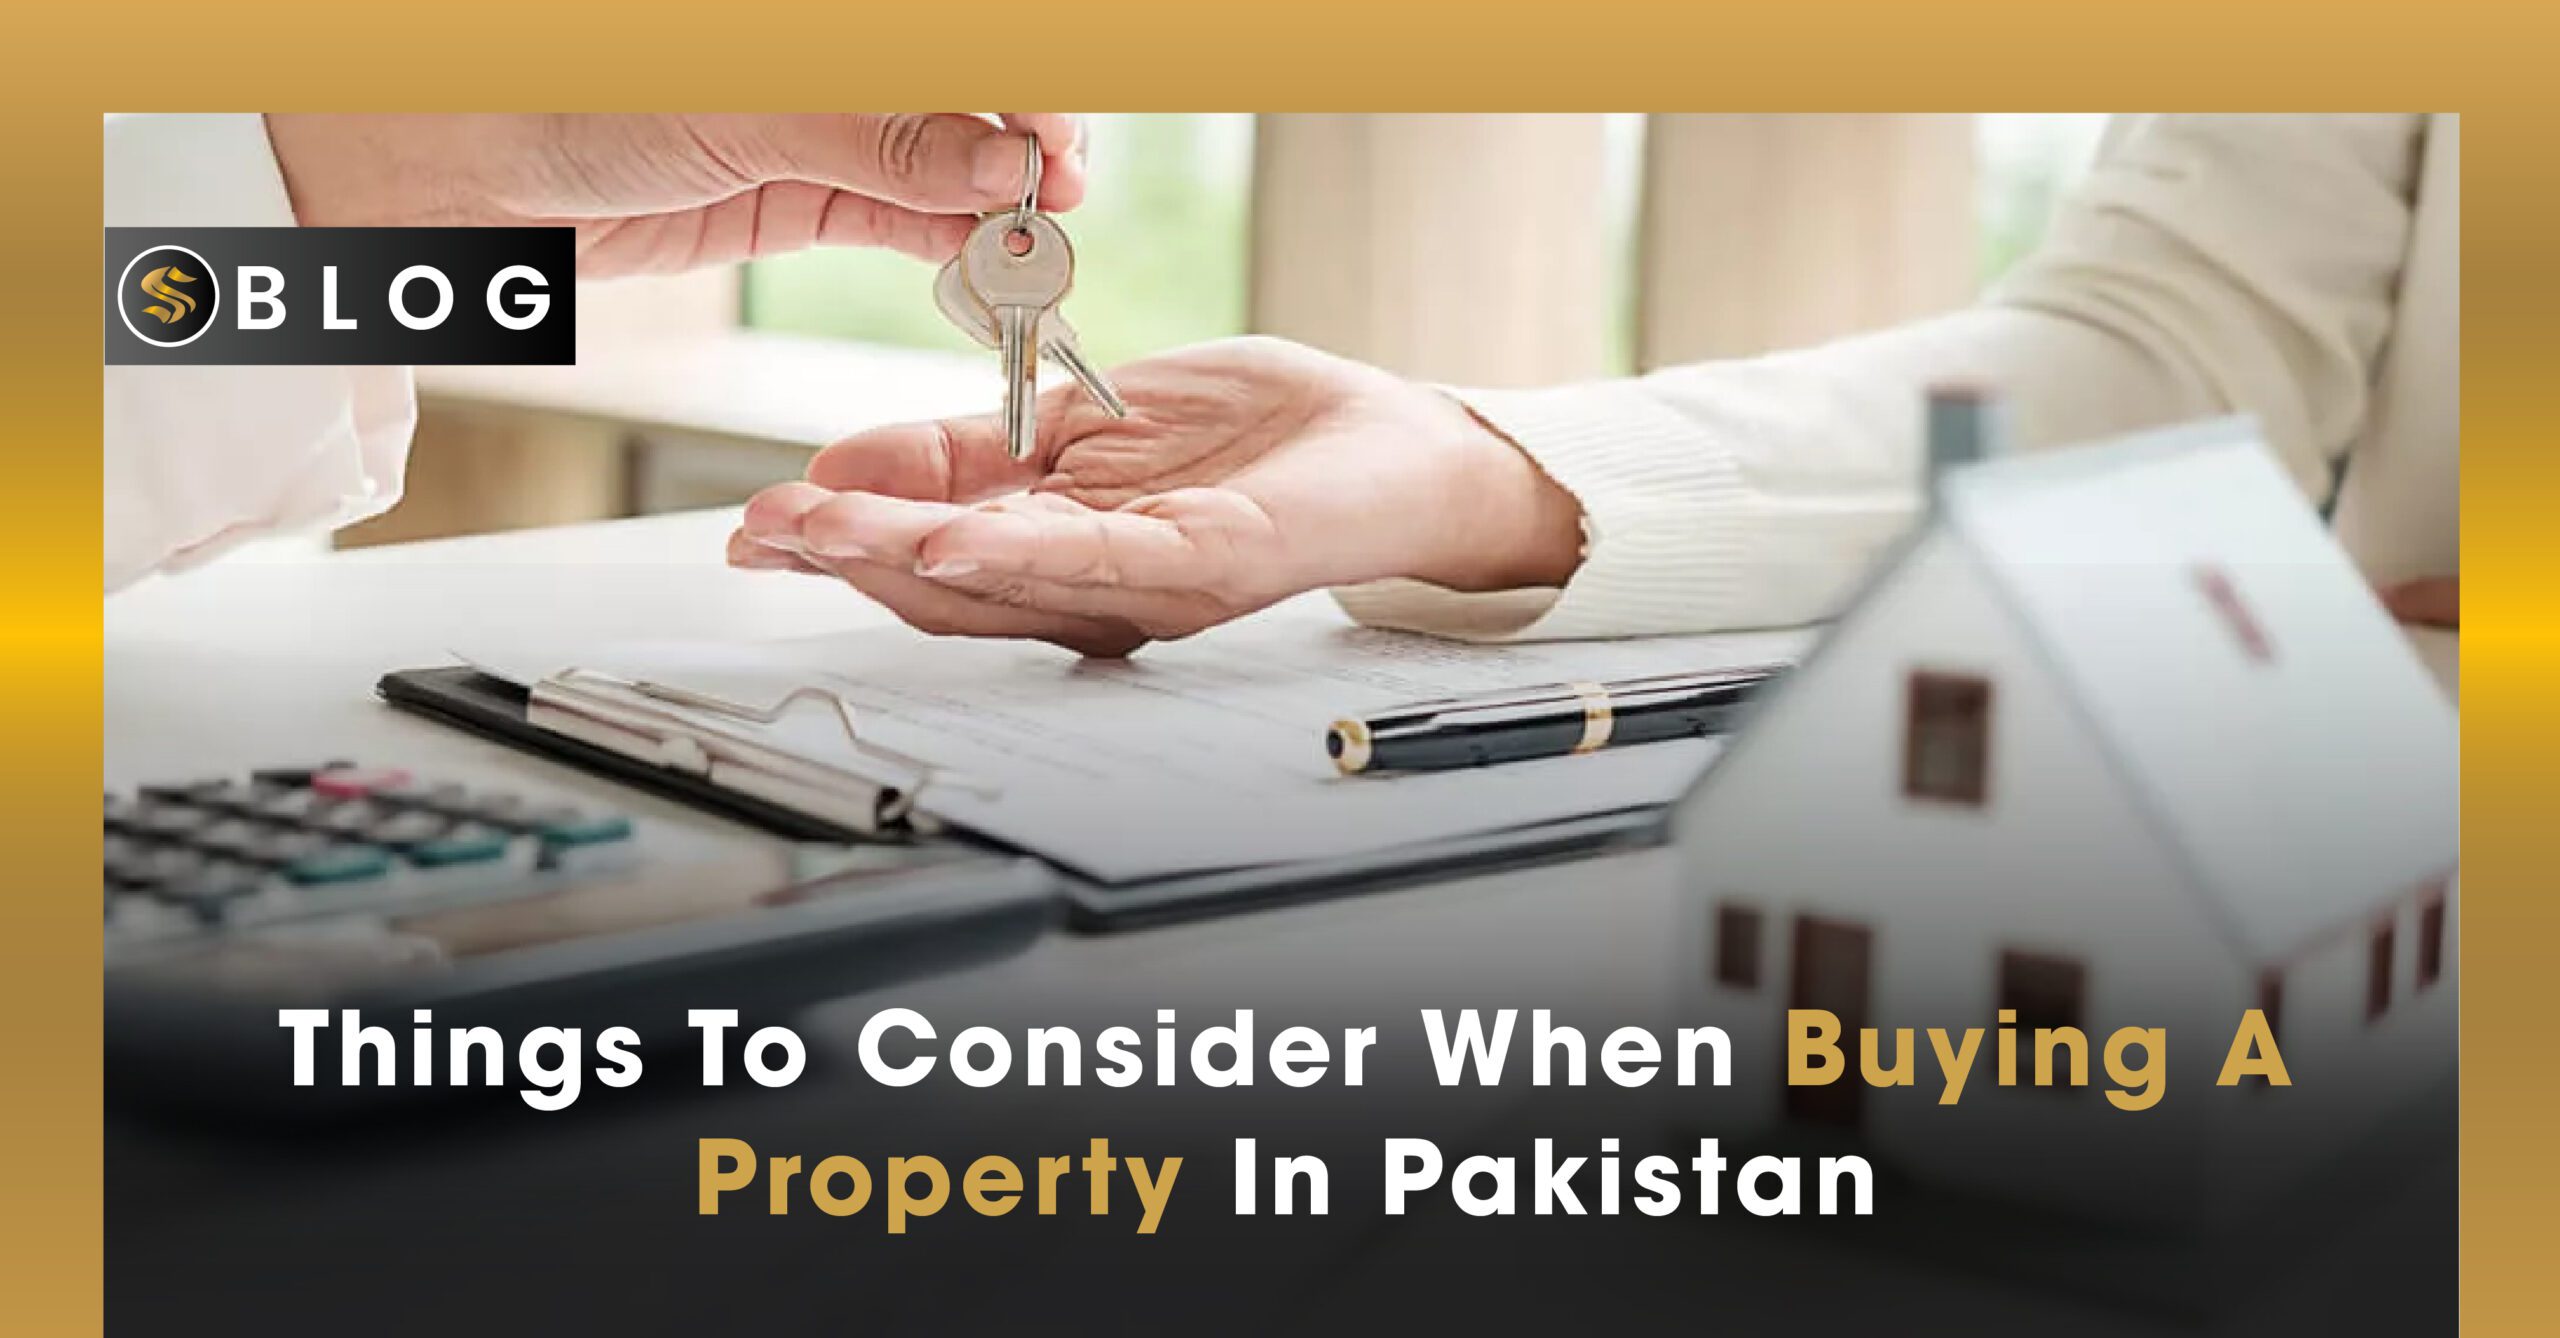 Property in Pakistan